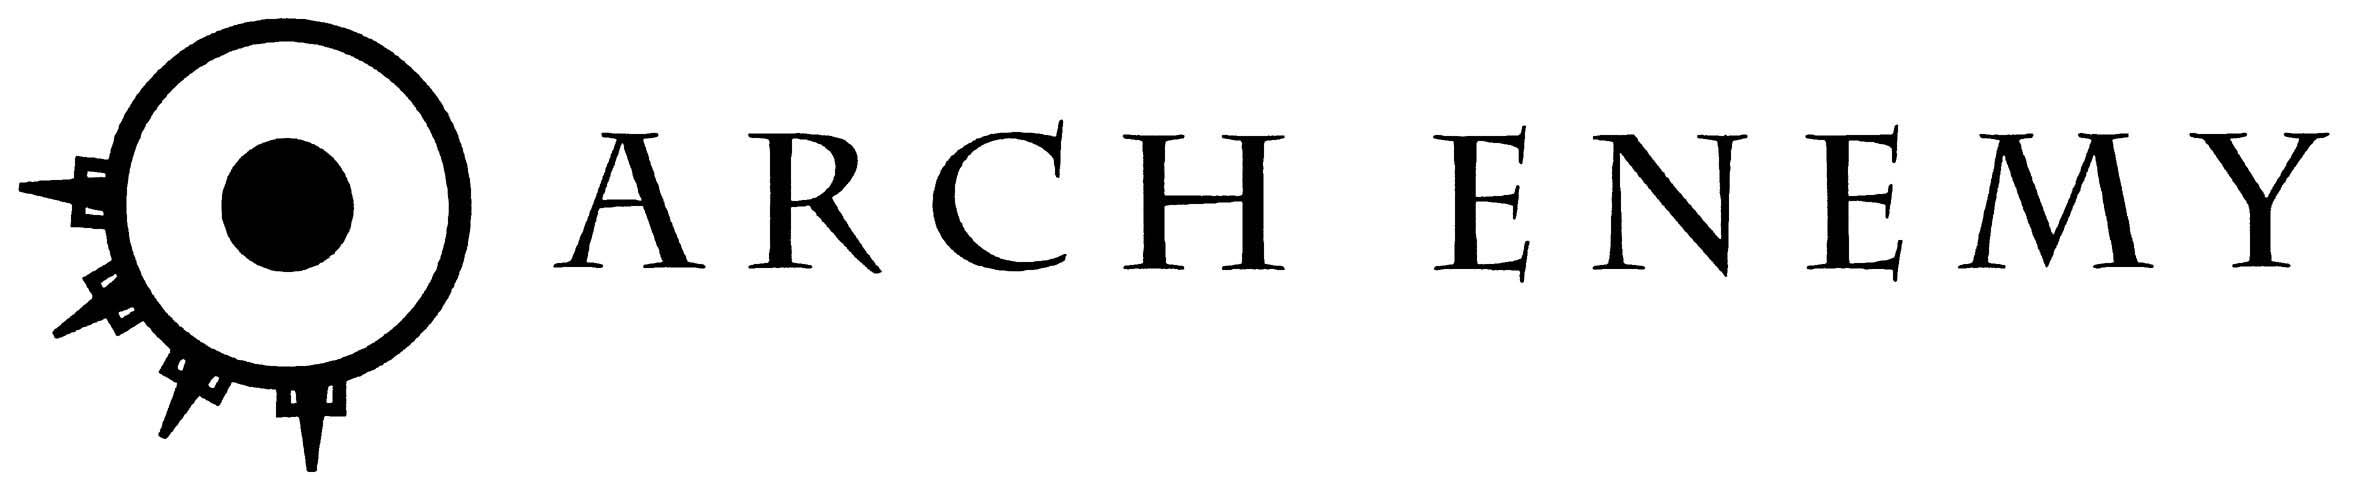 Arch Enemy PNG-PlusPNG.com-58